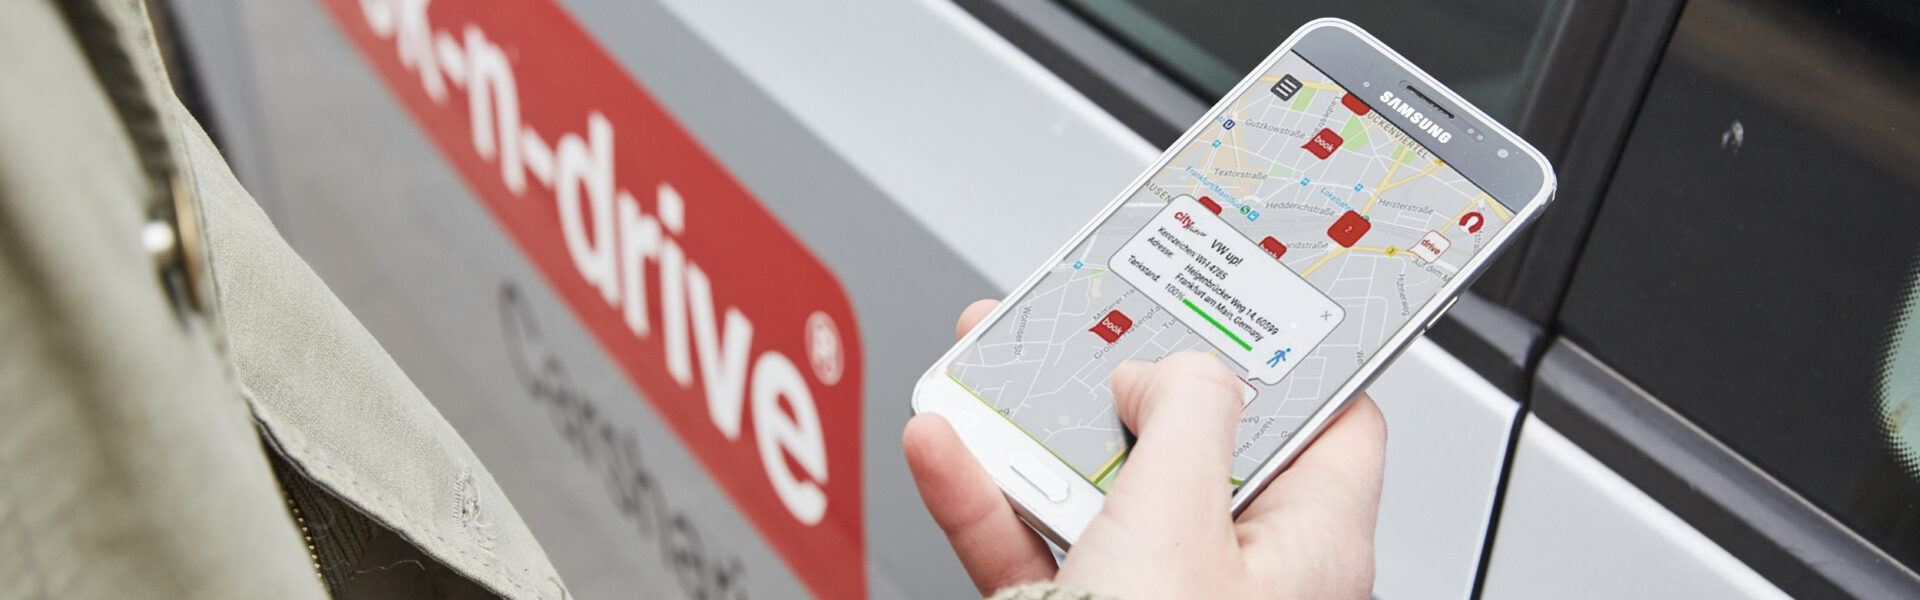 Header Bild Fünf Jahre nachhaltig mobil: HEAG book-n-drive Carsharing feiert Jubiläum